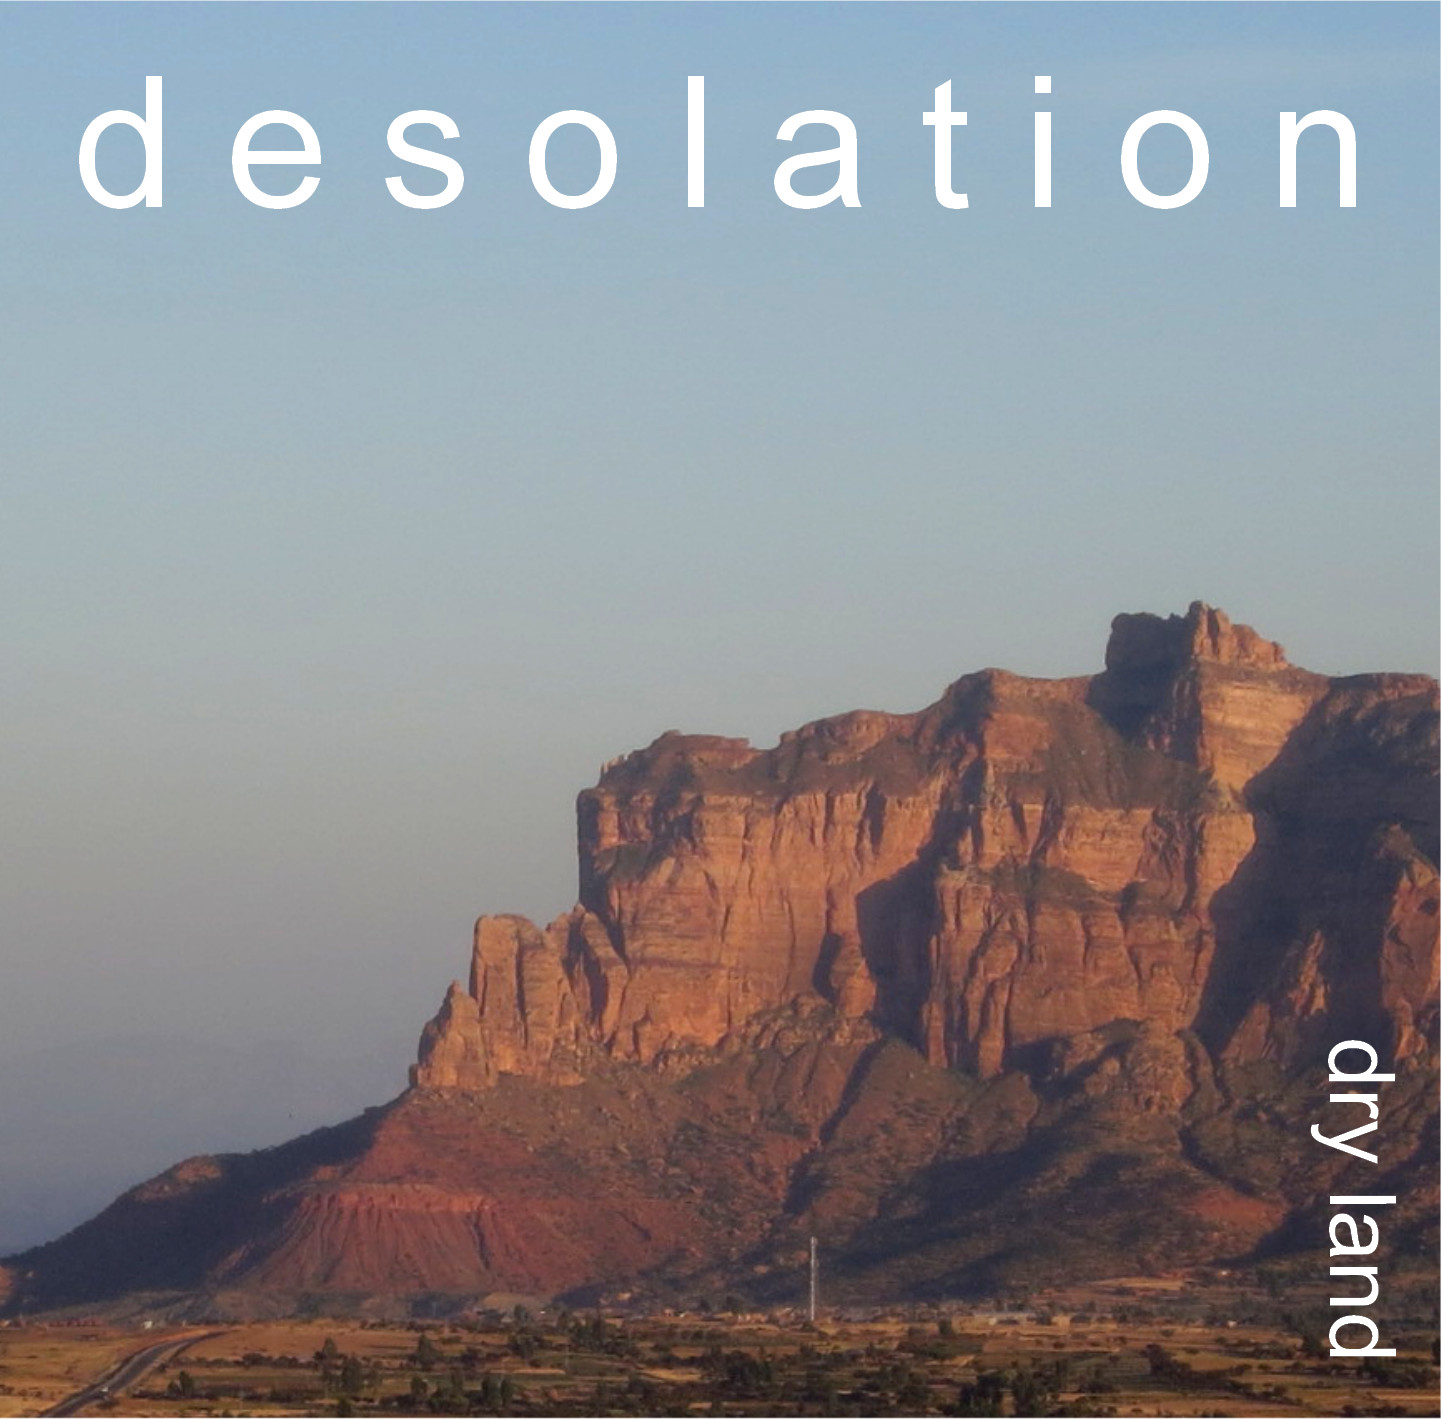 dry land - desolation